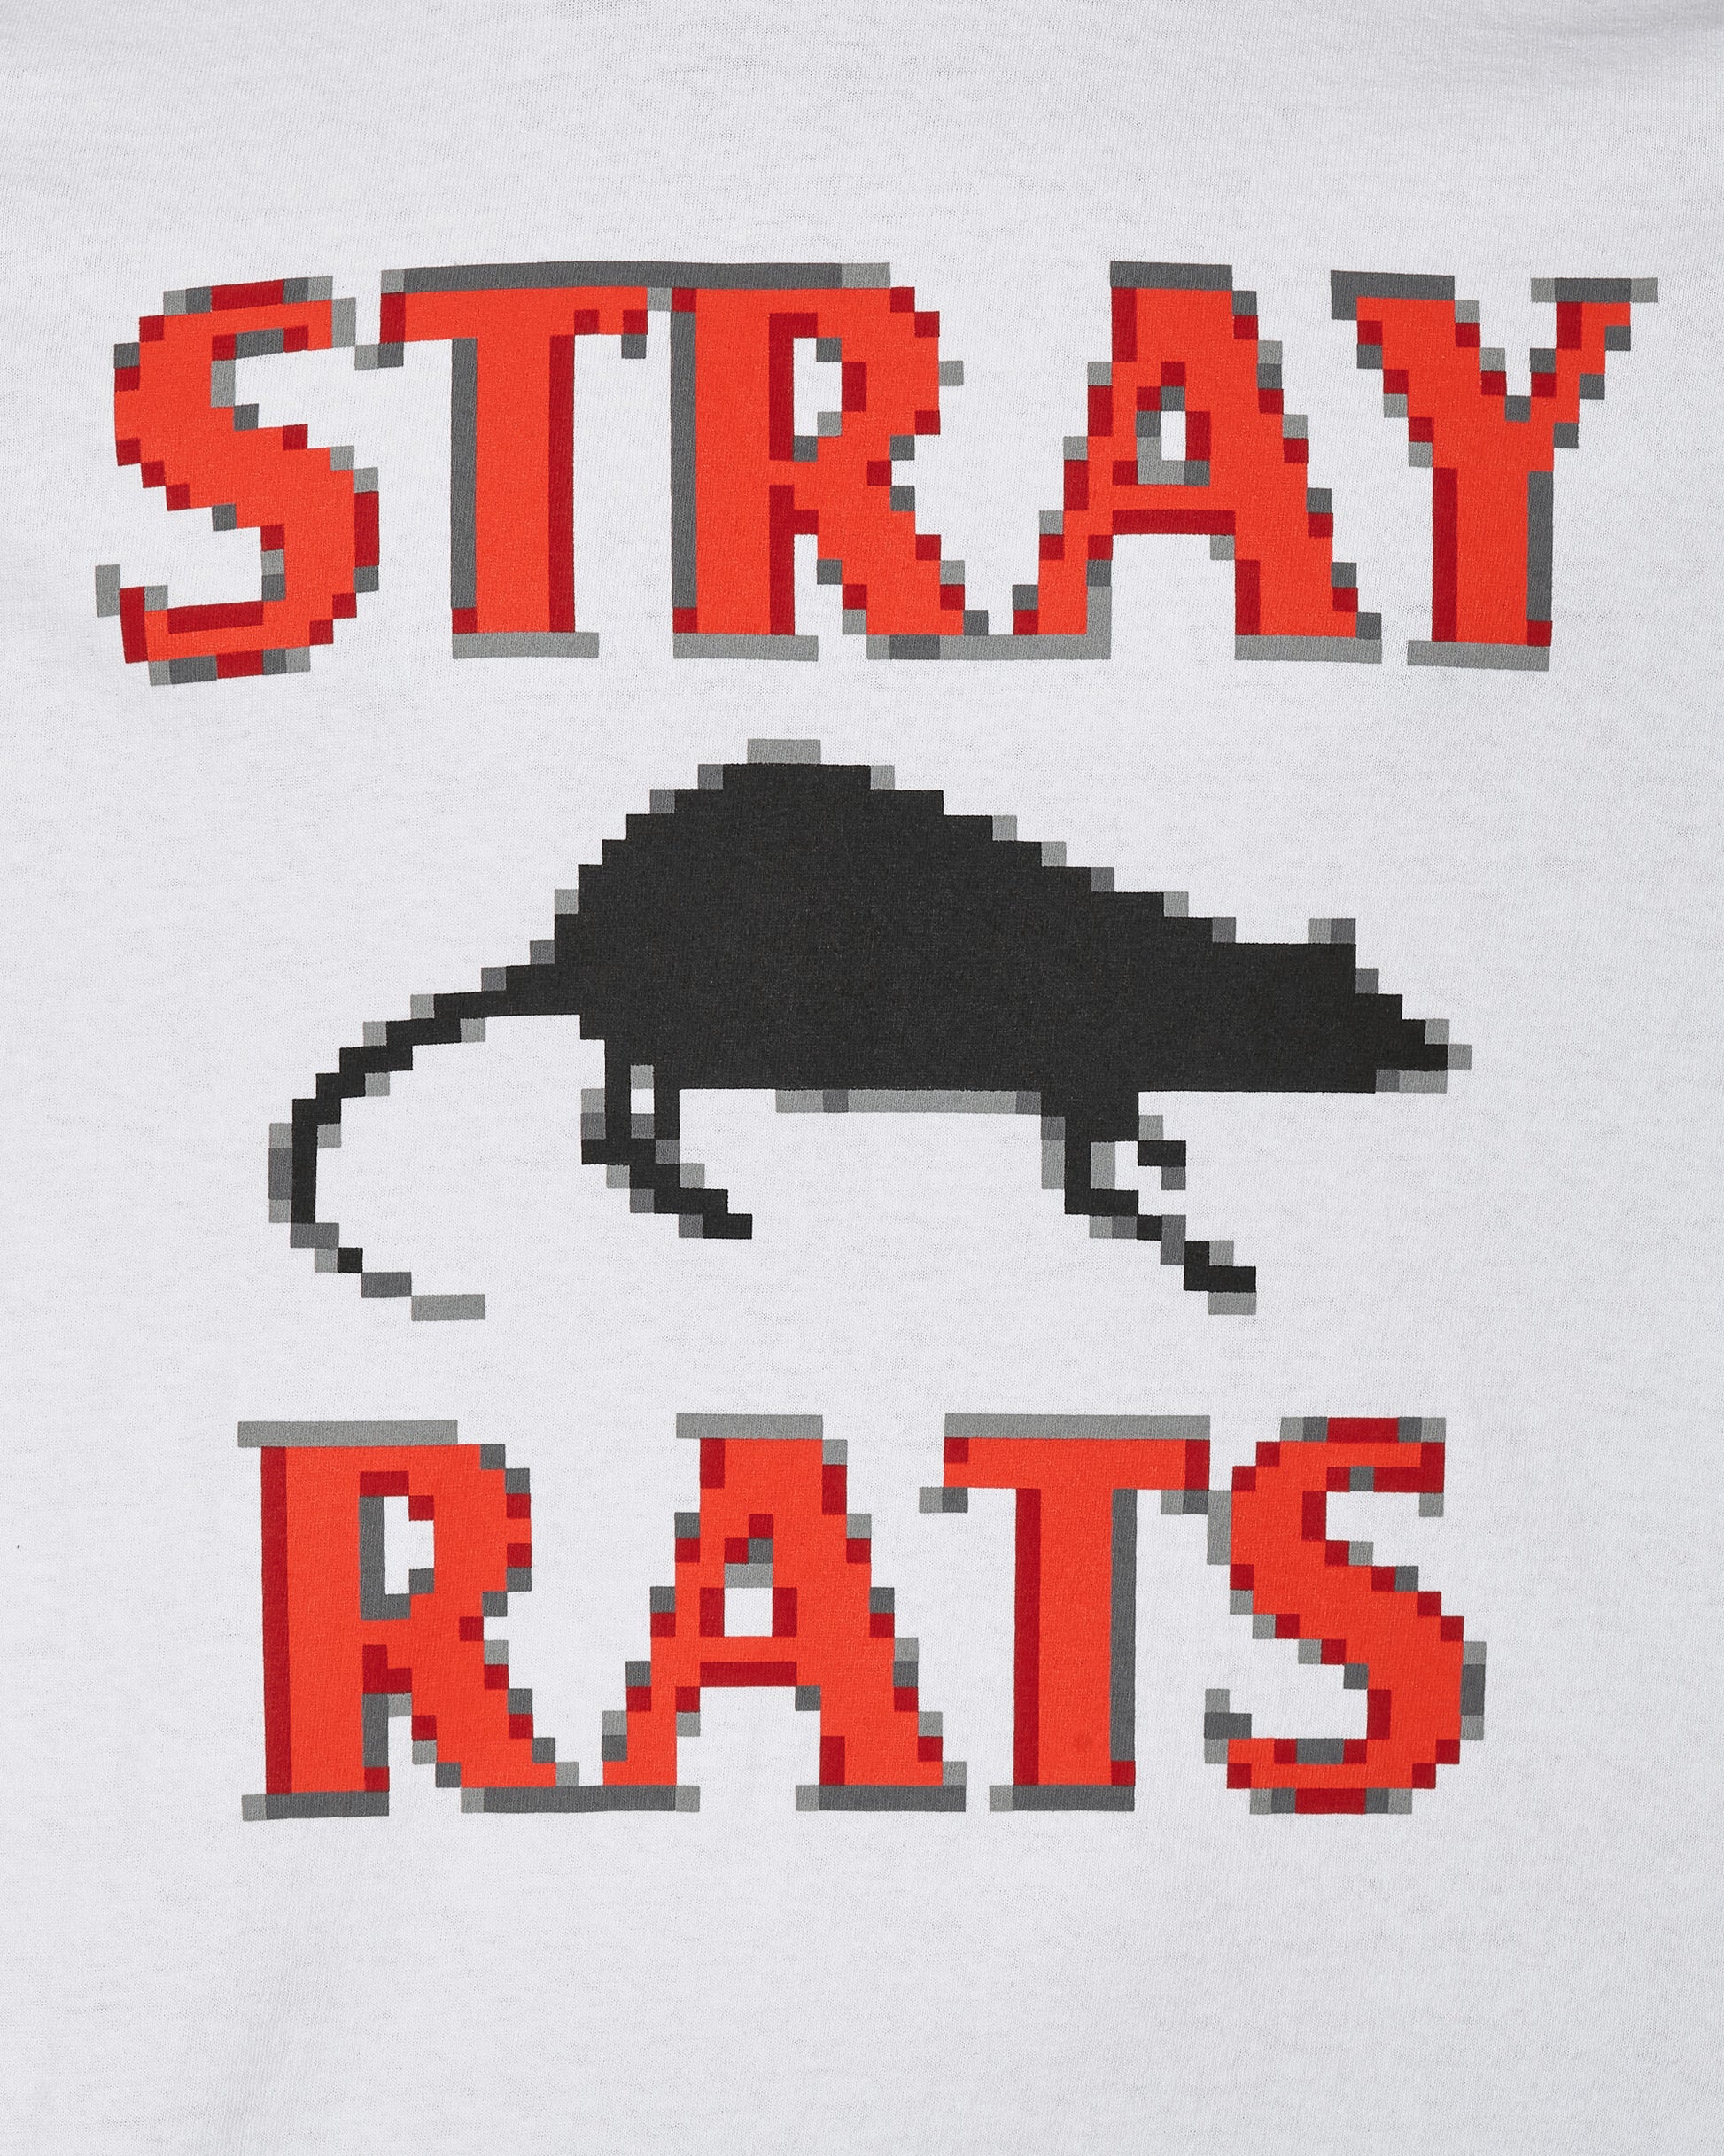 Stray Rats Pixel Rodenticide Tee White T-Shirts Shortsleeve SRT1196 WHITE